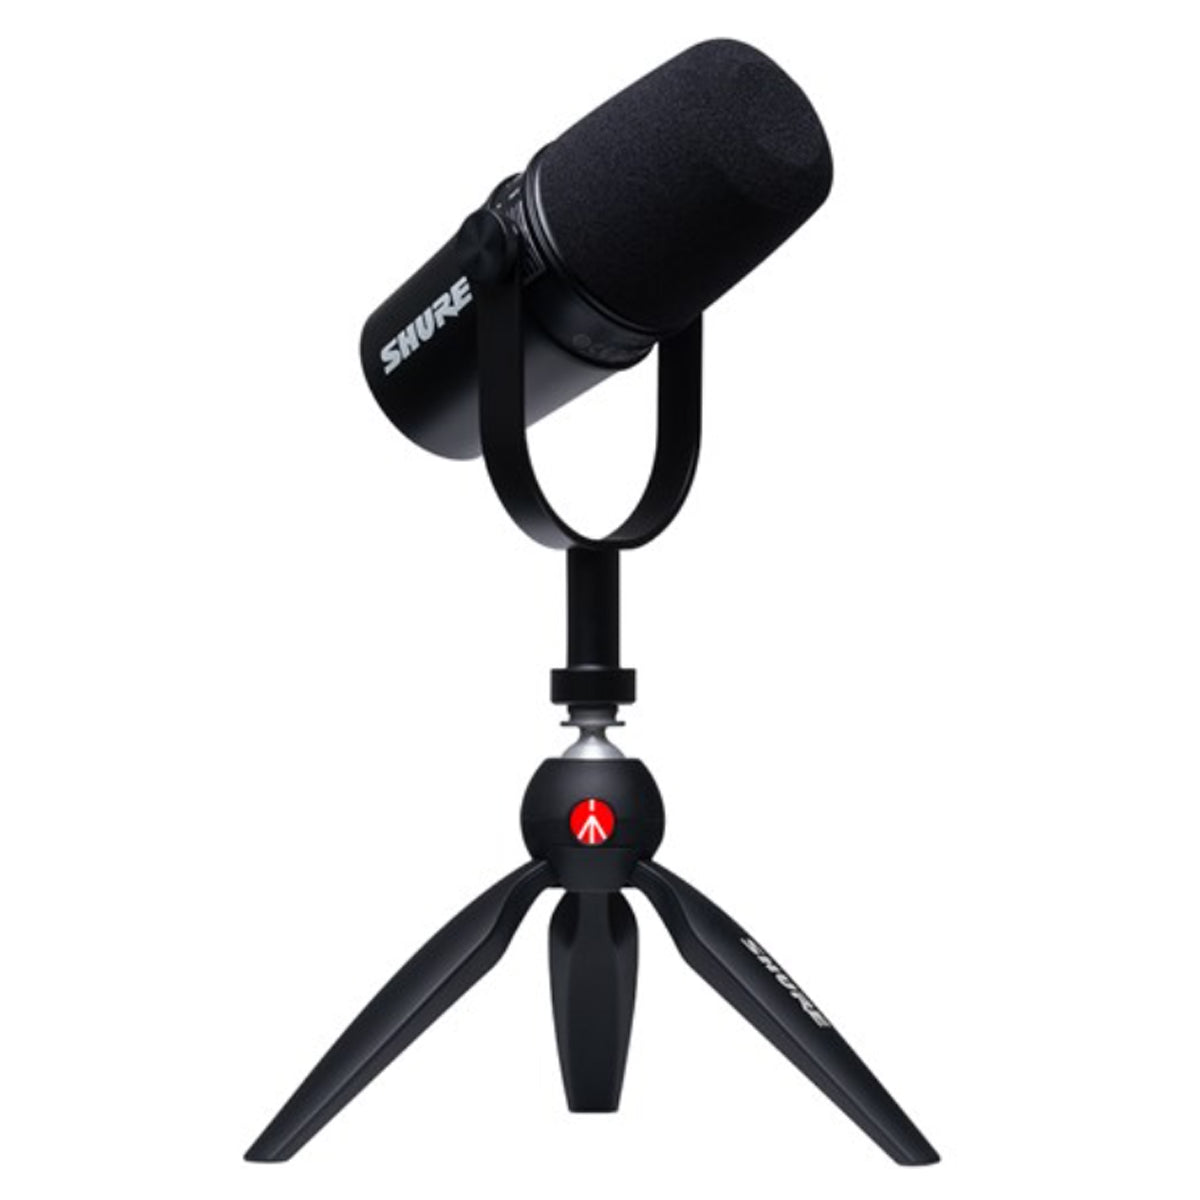 Shure MOTIV MV7 Podcast Microphone Kit w/ Manfrotto PIXI Mini Tripod Mic Stand - Black